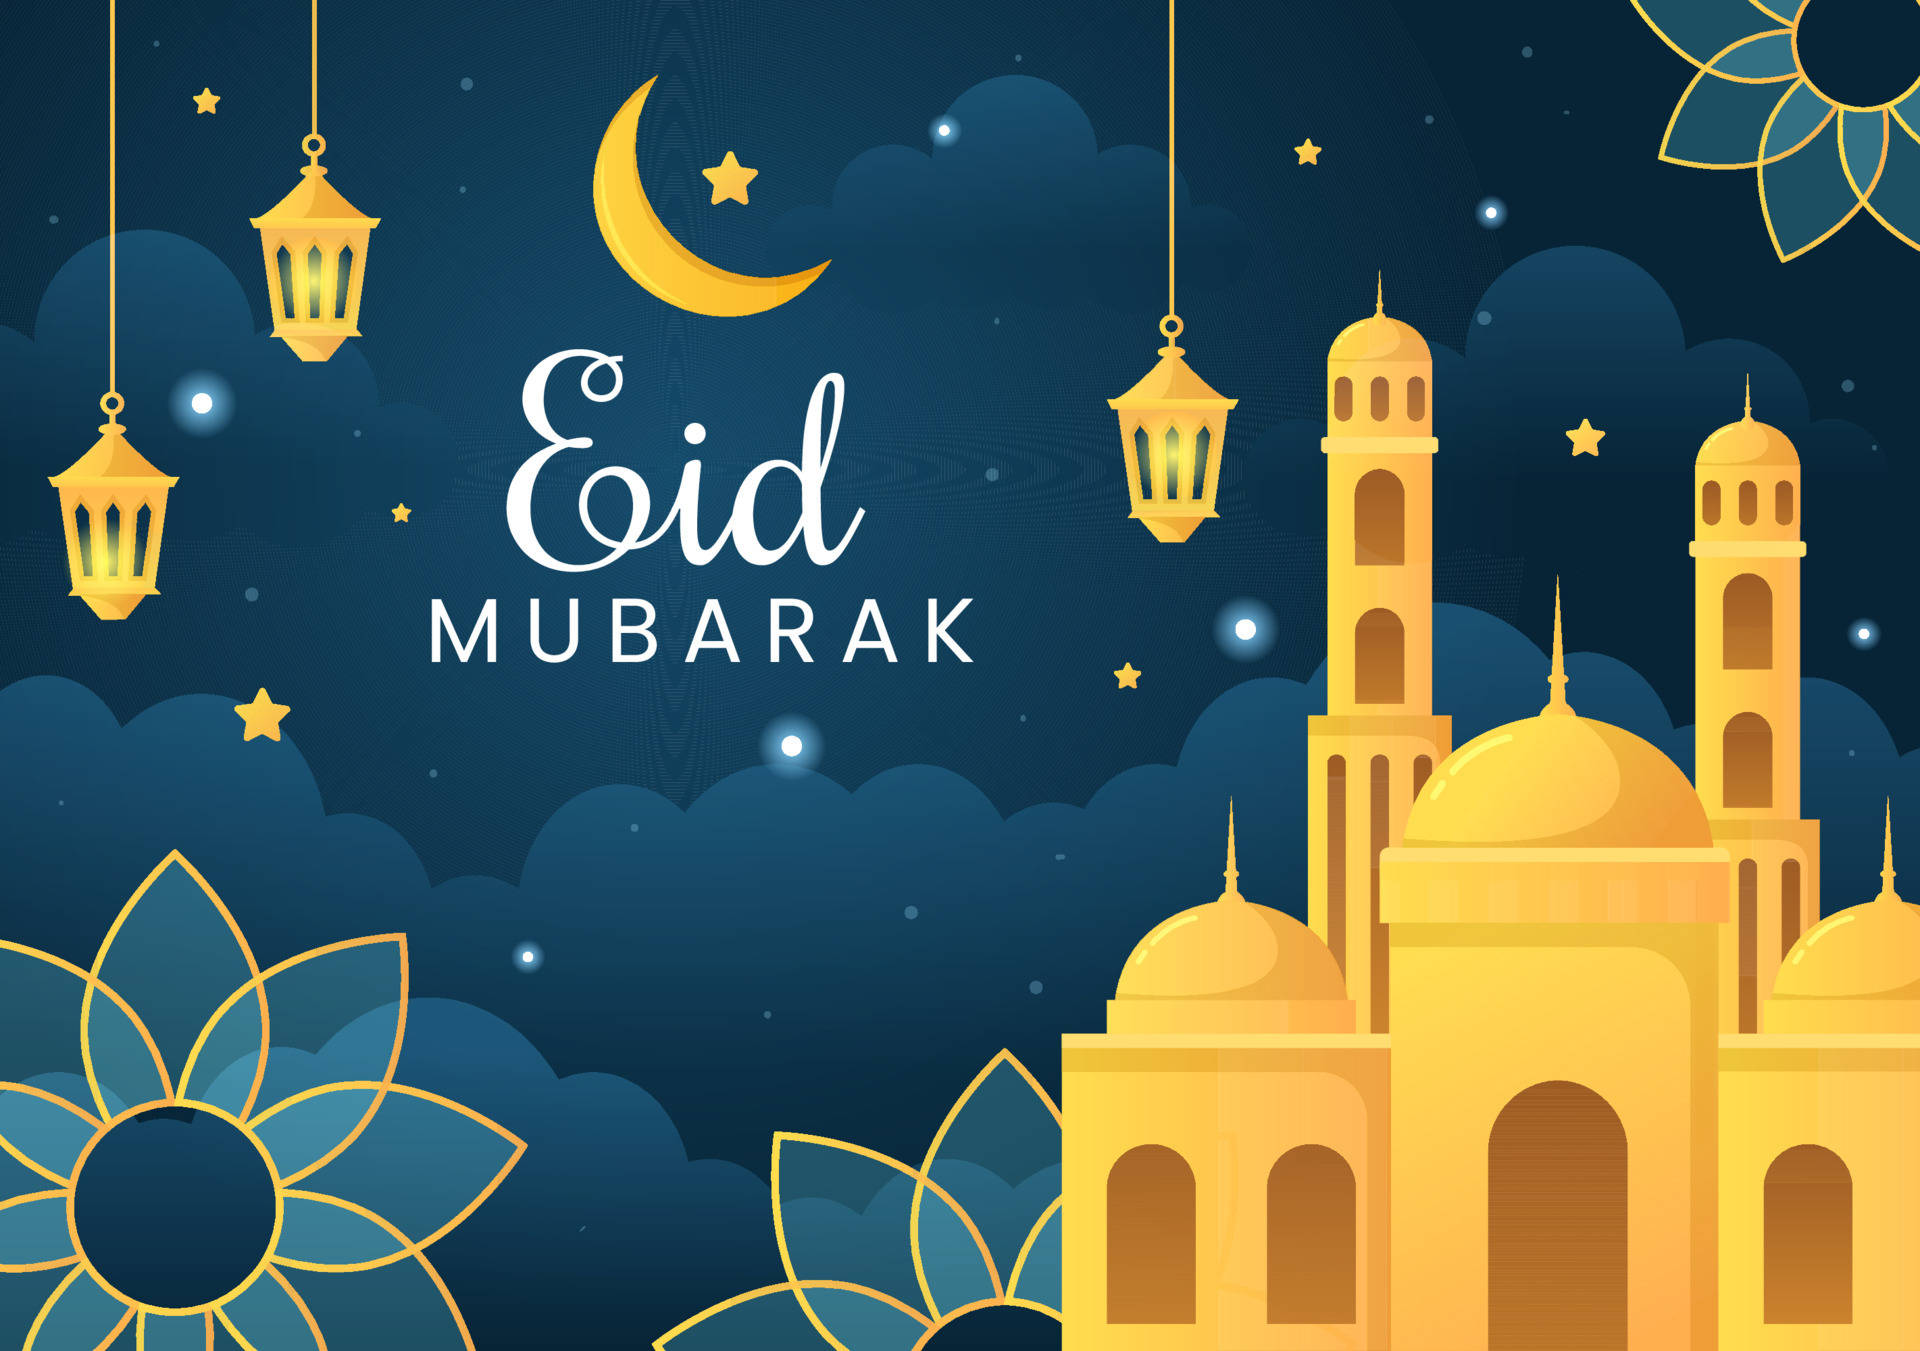 Celebrating The Spirit Of Eid - Eid Mubarak